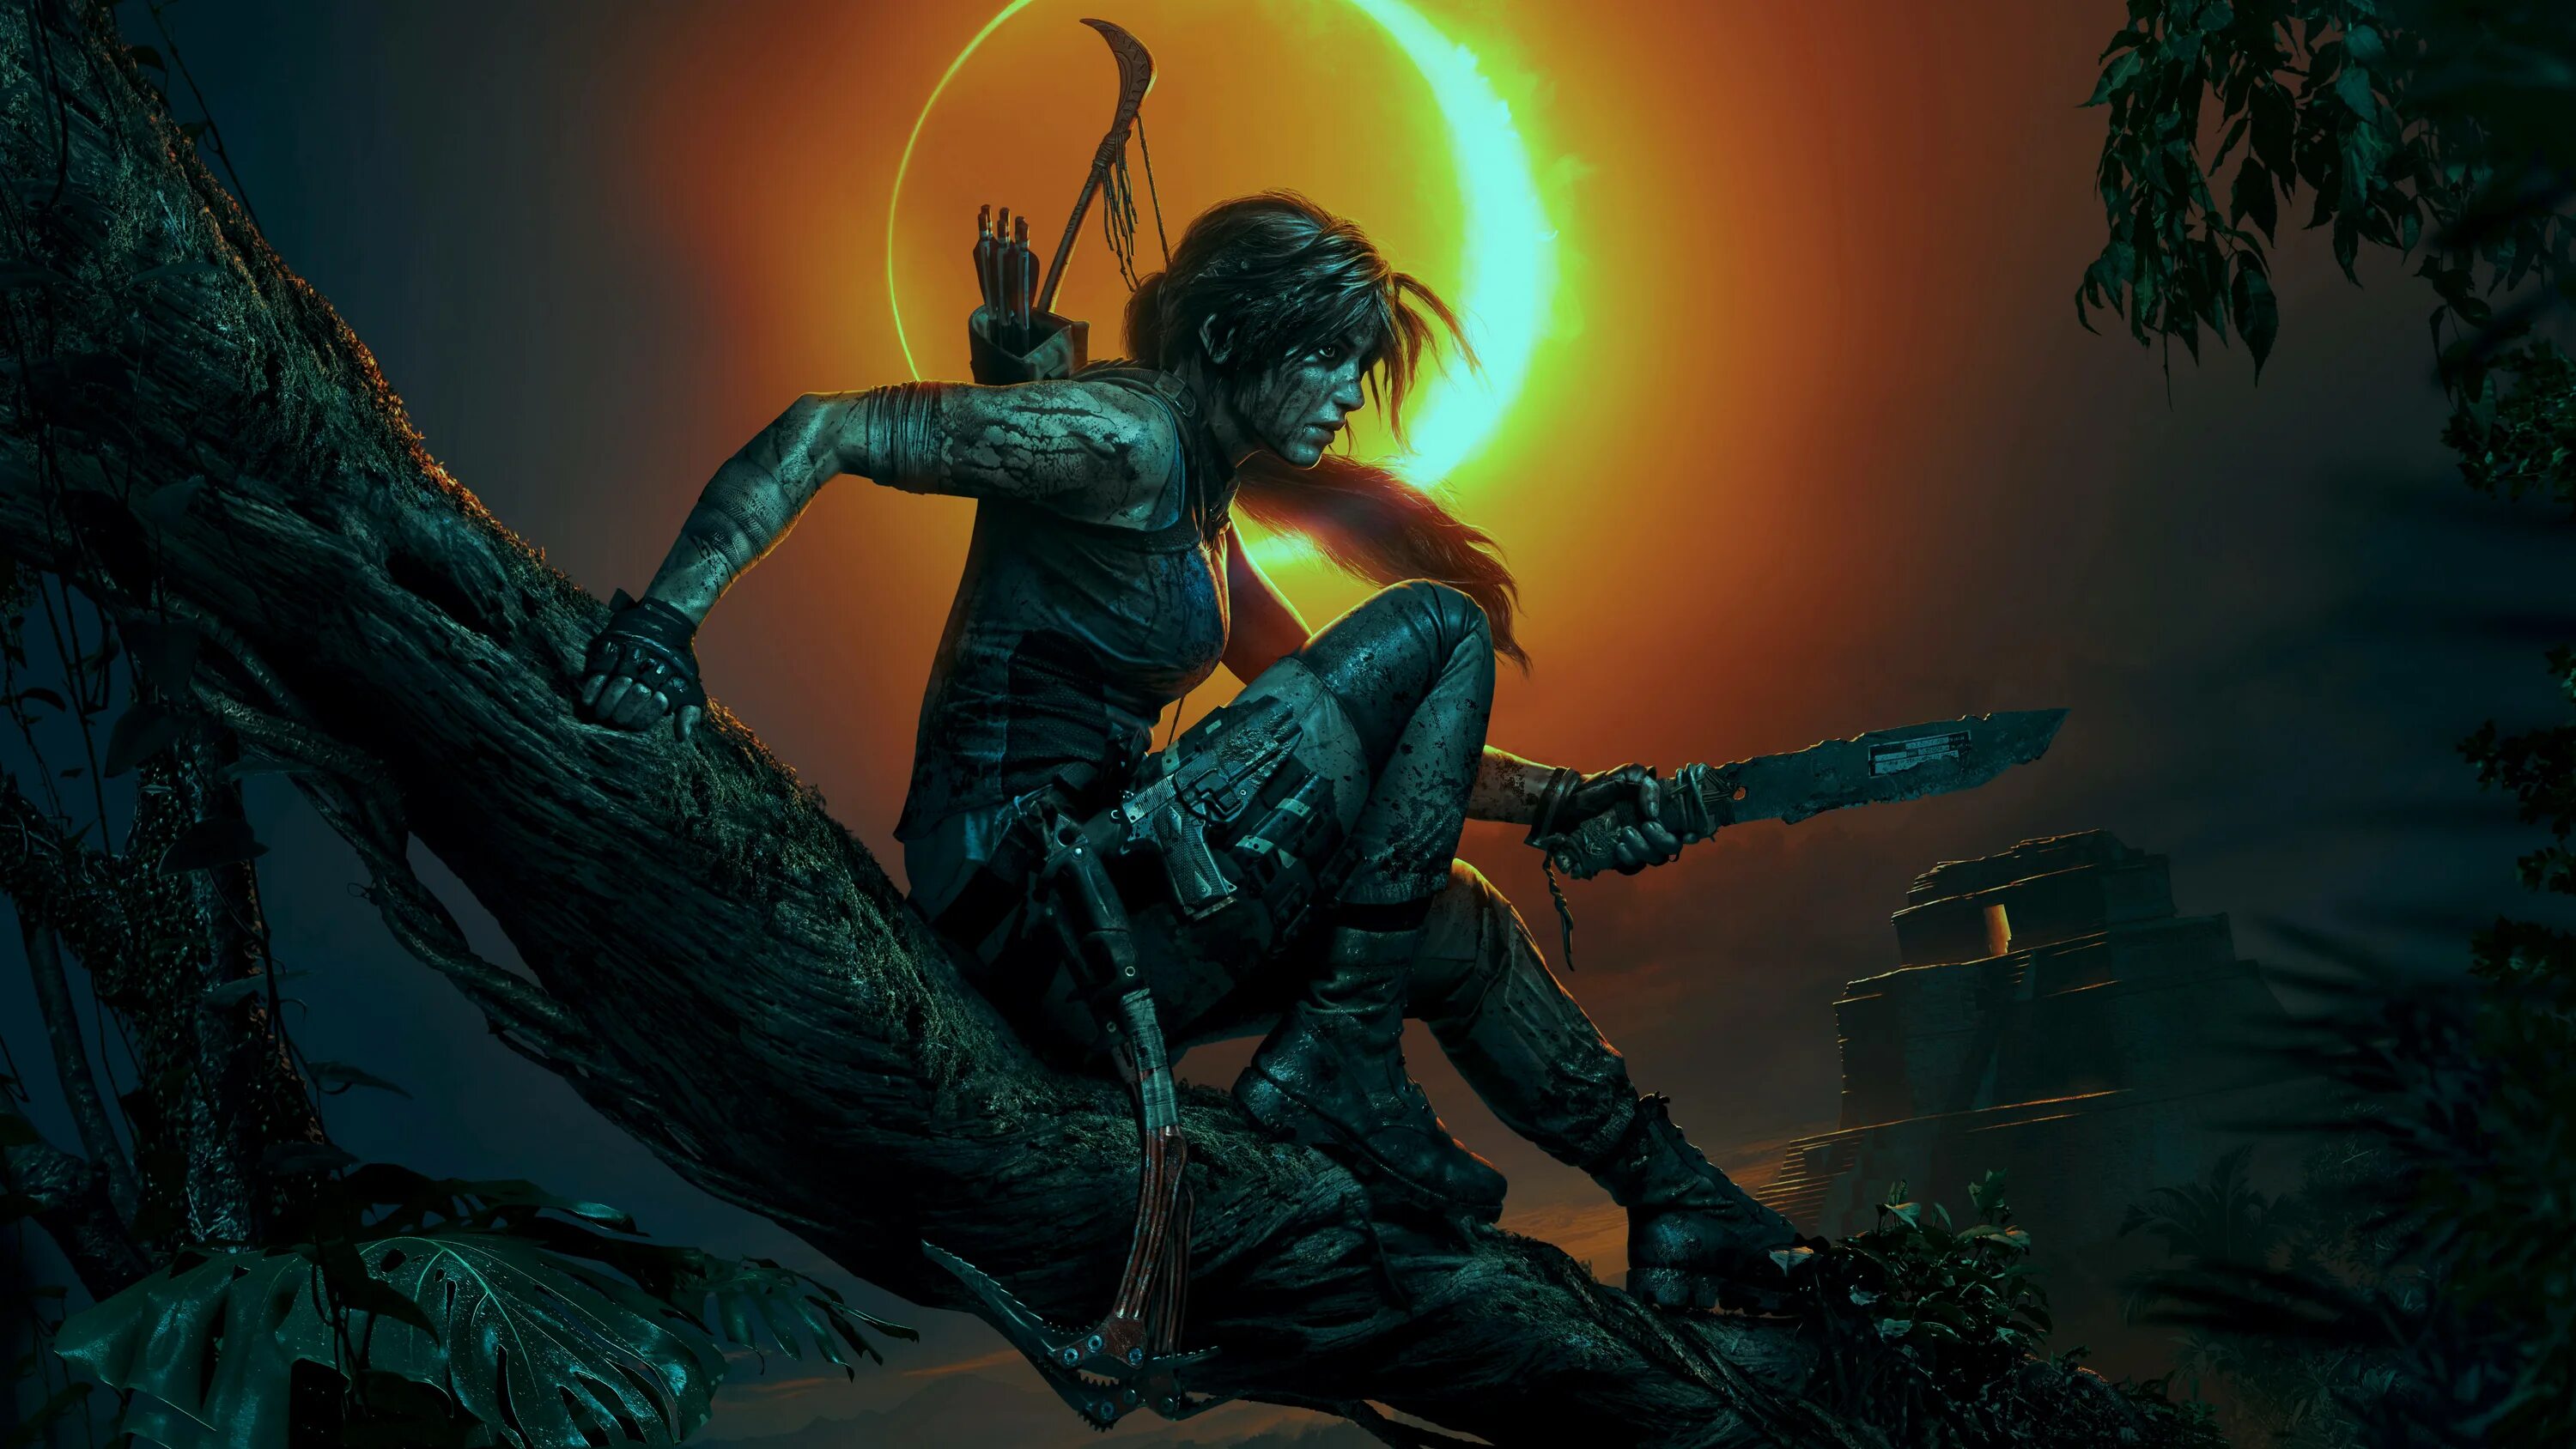 Tom shadow. Shadow of the Tomb Raider. Shadow of the Tomb Raider 4к. Shadow of the Tomb Raider Wallpaper.